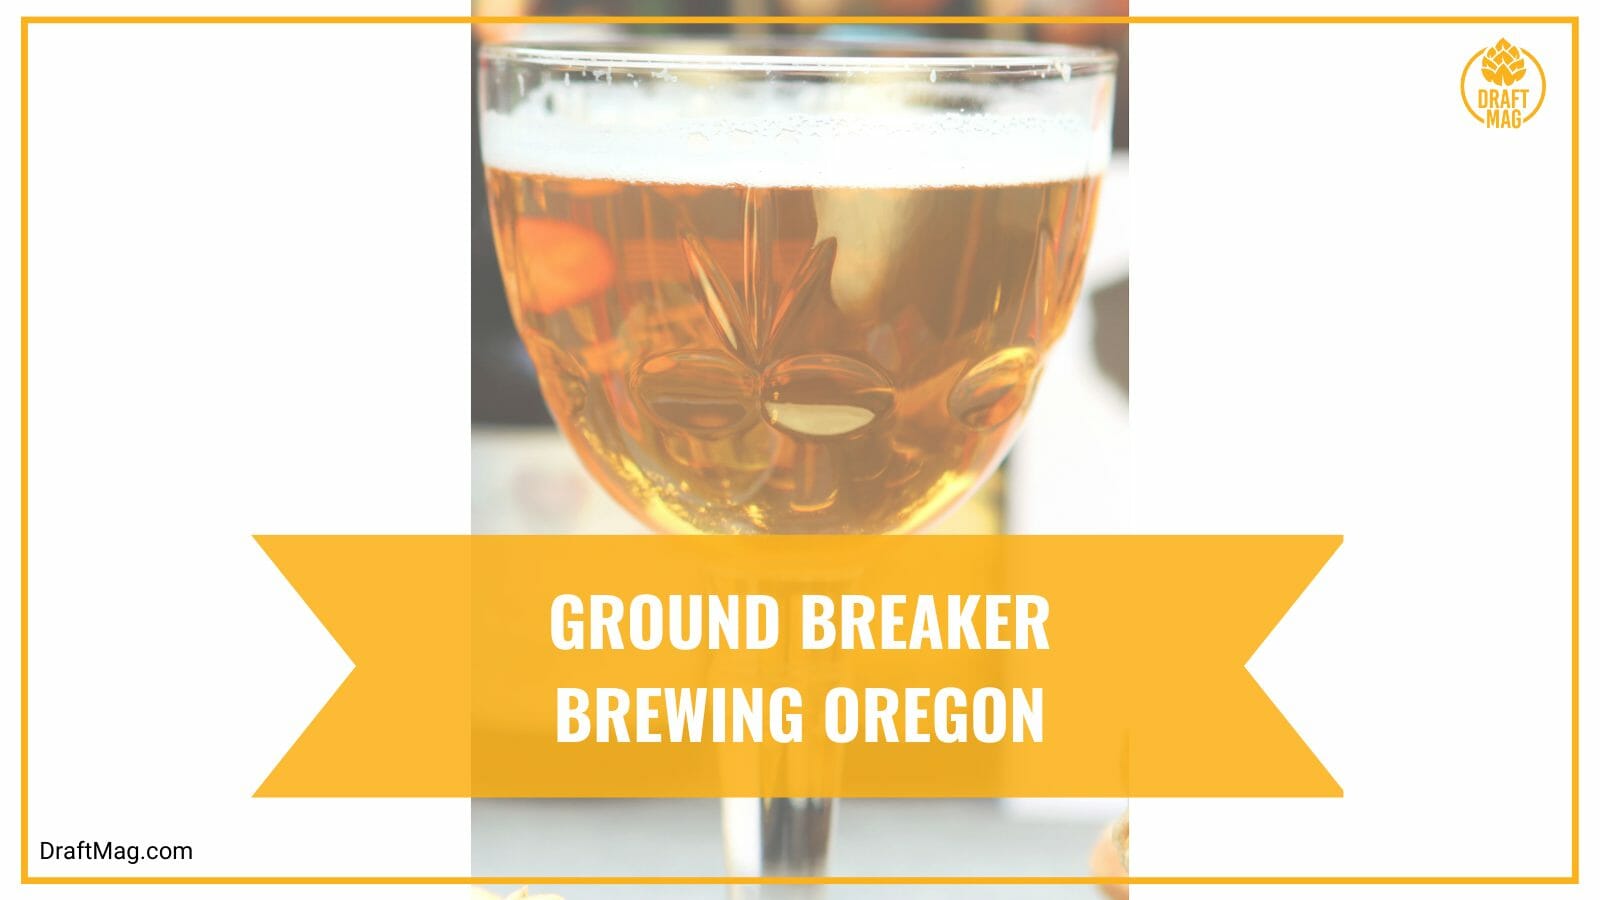 Ground breaker brewing oregon